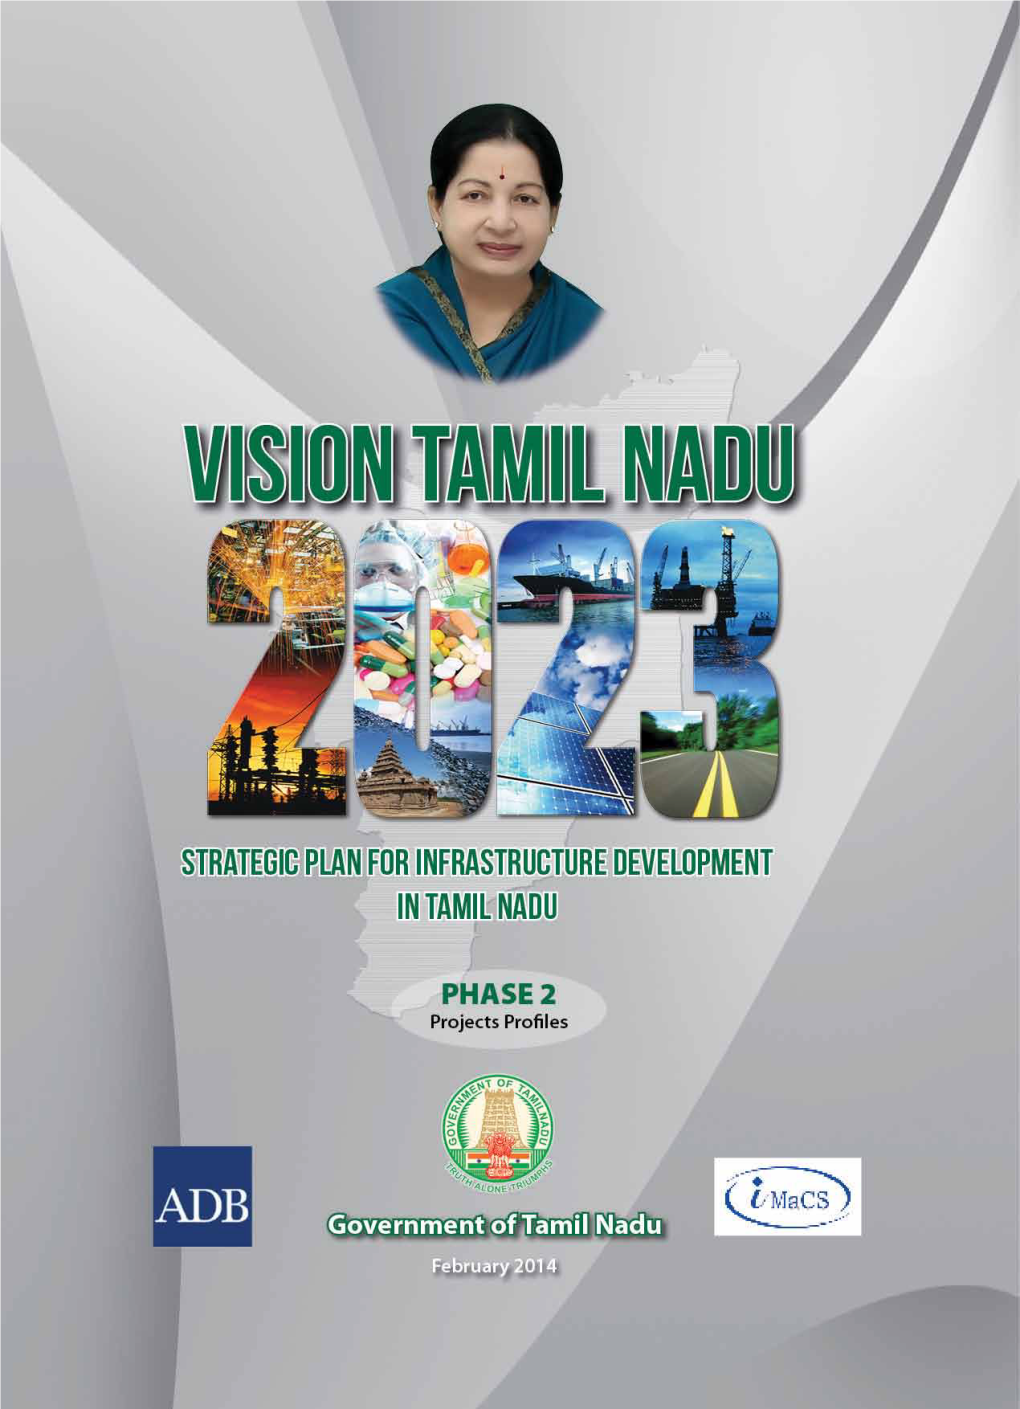 Vision Tamil Nadu 2023 Vision Tamil Nadu 2023 2 Vision Tamil Nadu